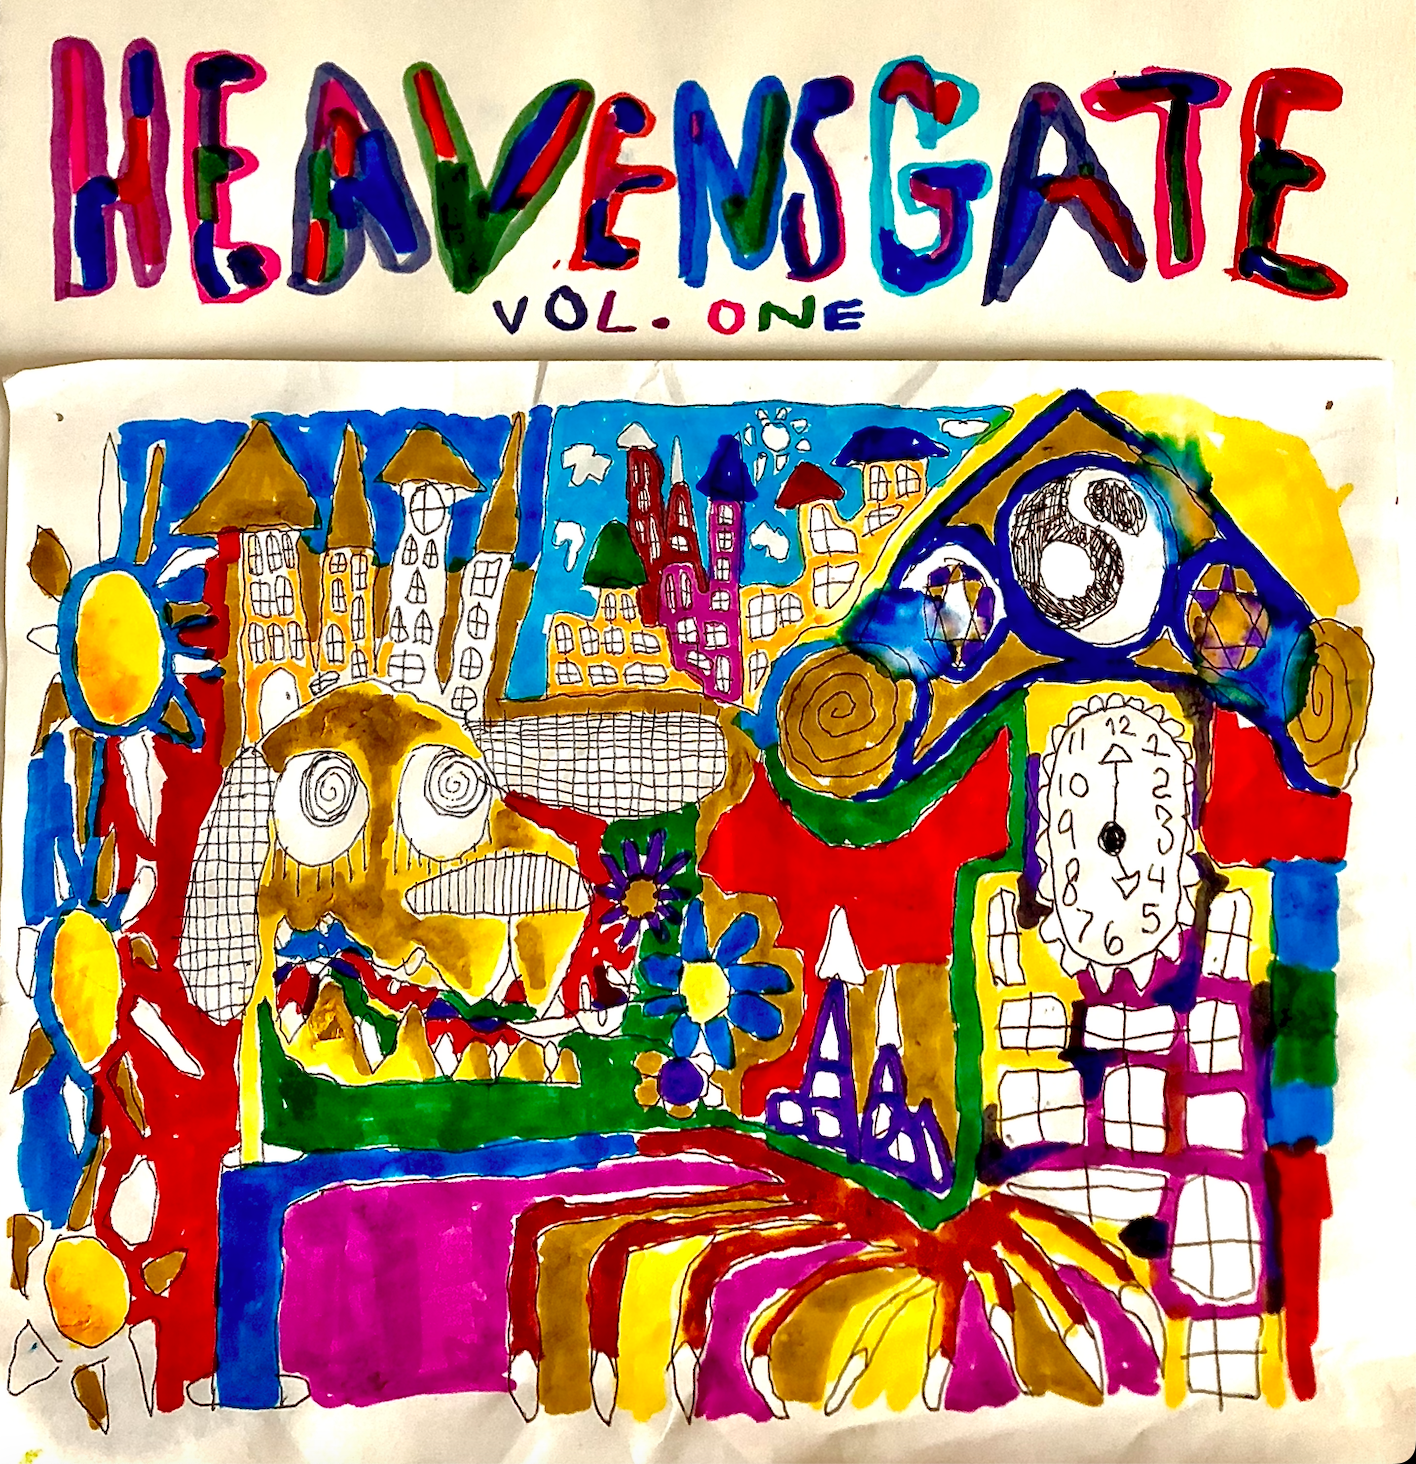 #HEAVENSGATE VOL. 1 by evilgiane album art